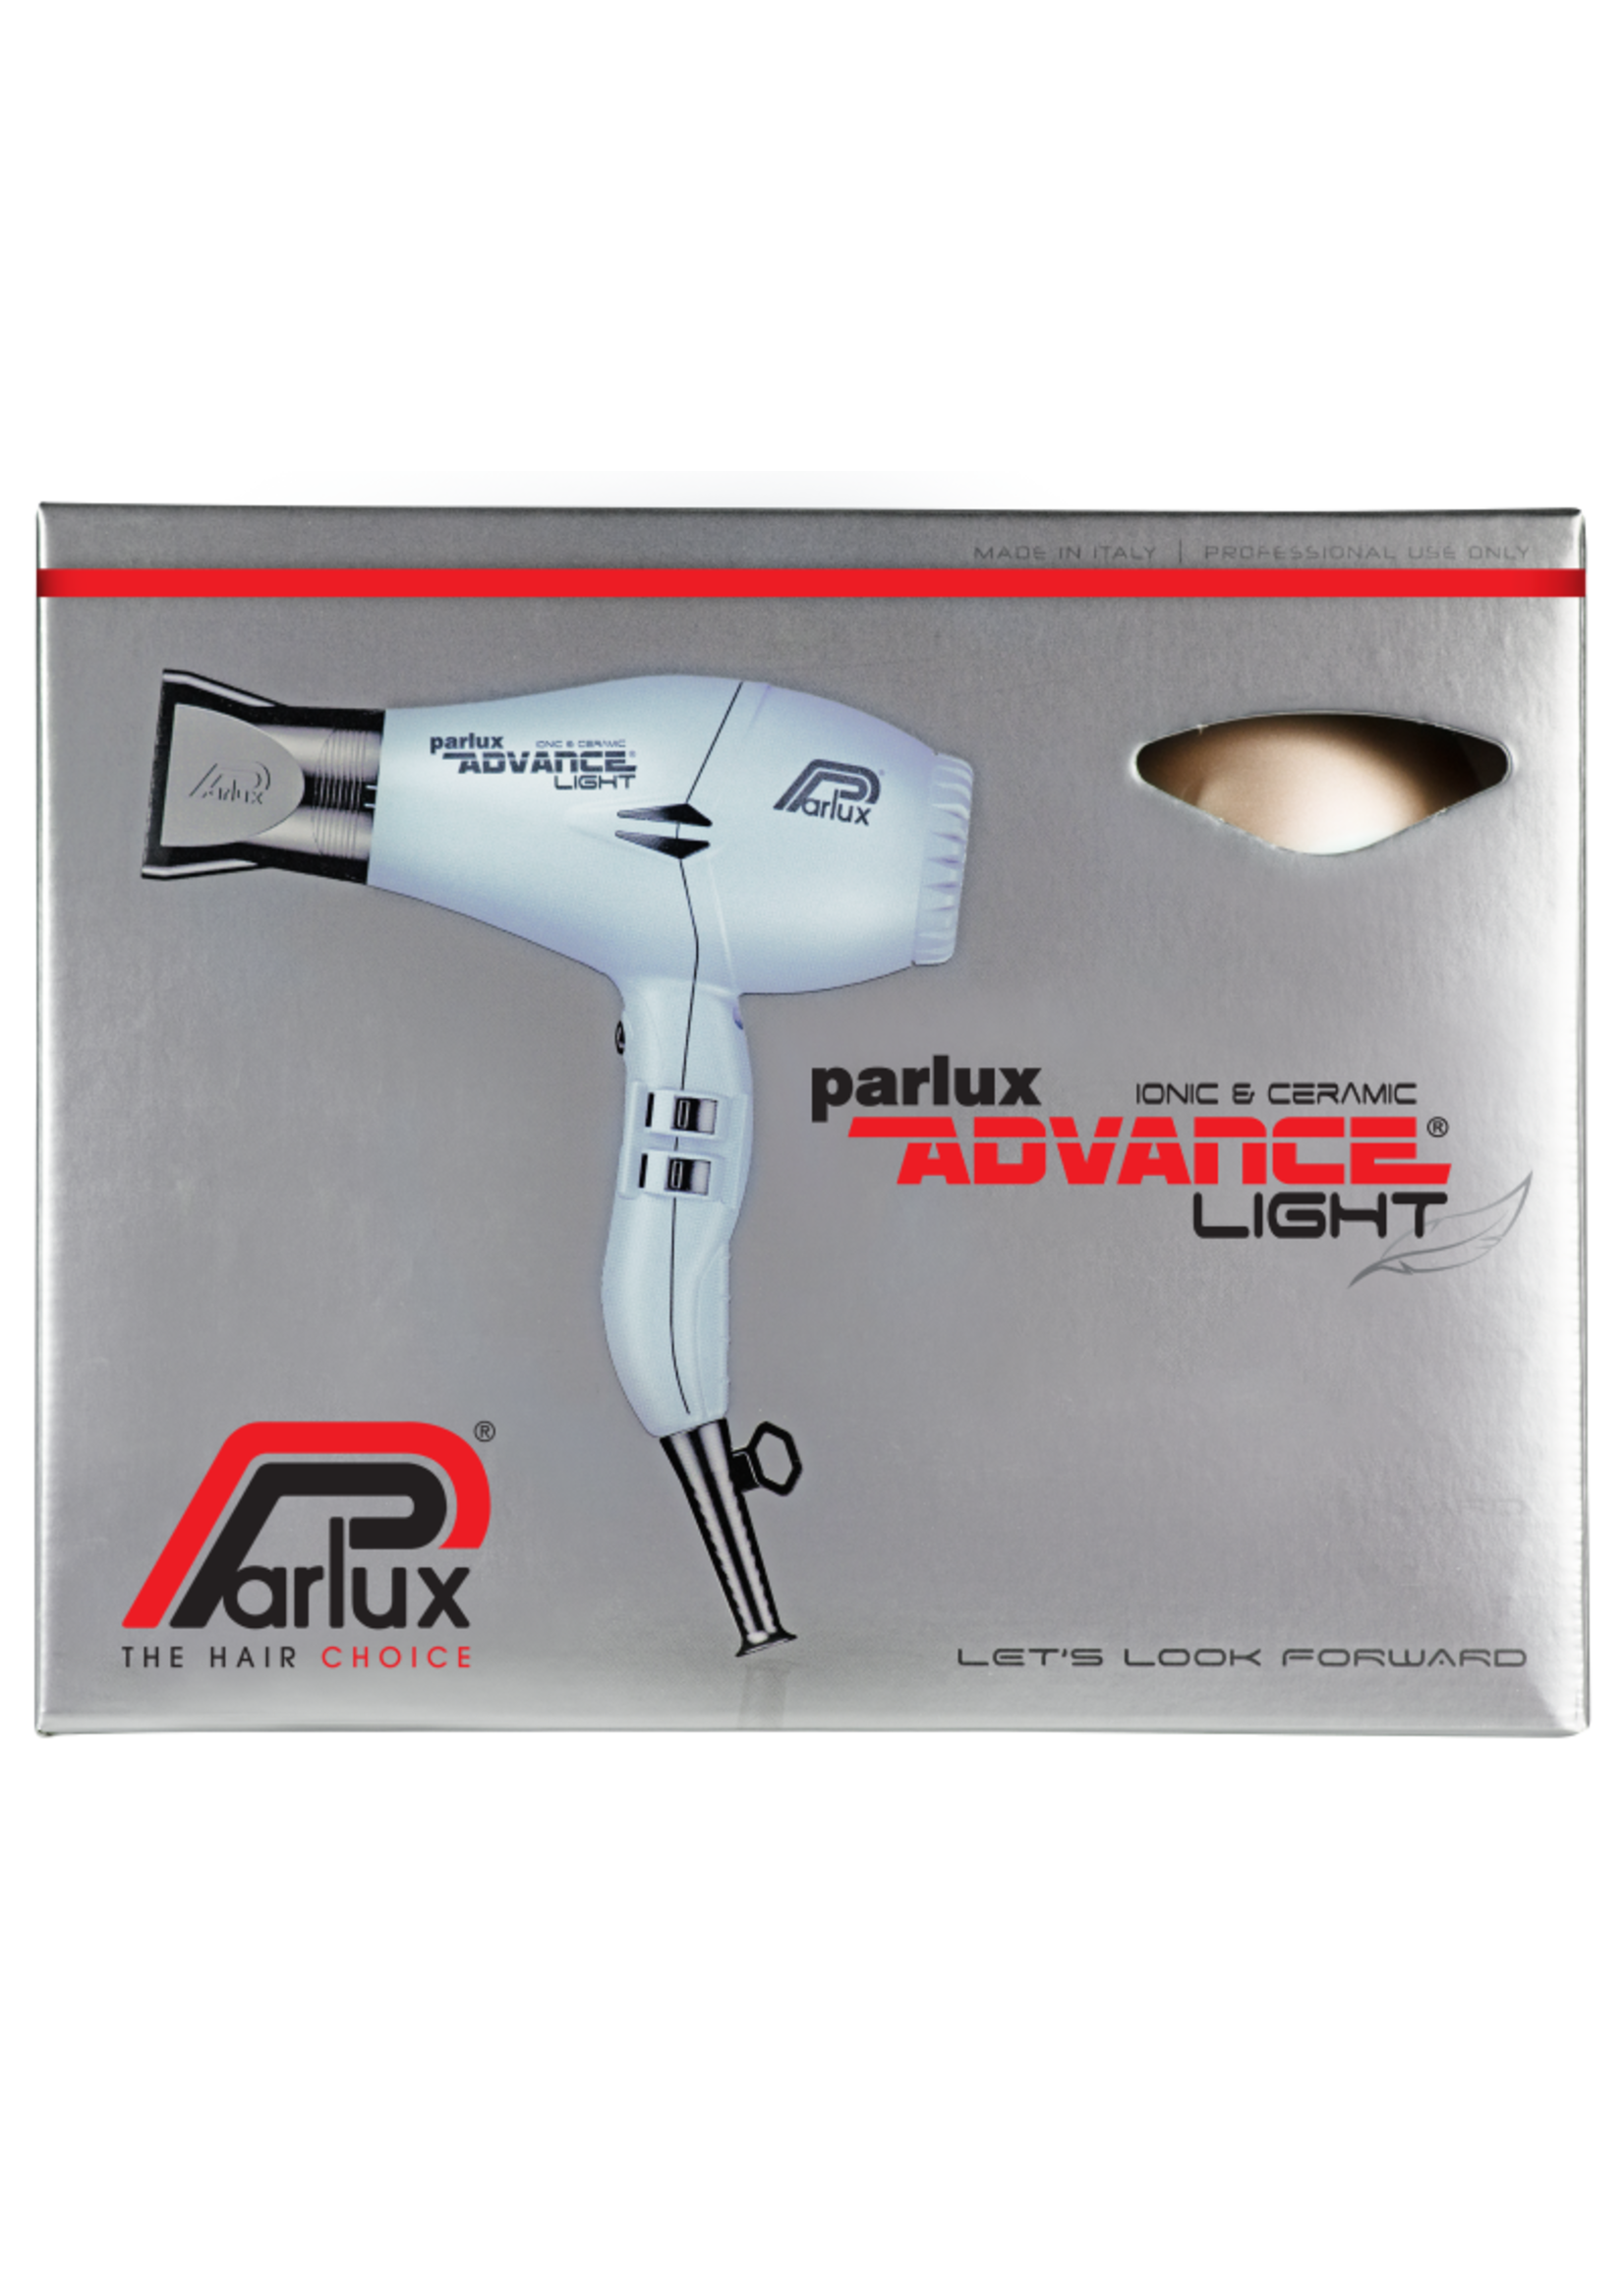 Parlux Parlux Advance Light Ceramic & Ionic Hair Dryer 2200W - Gold